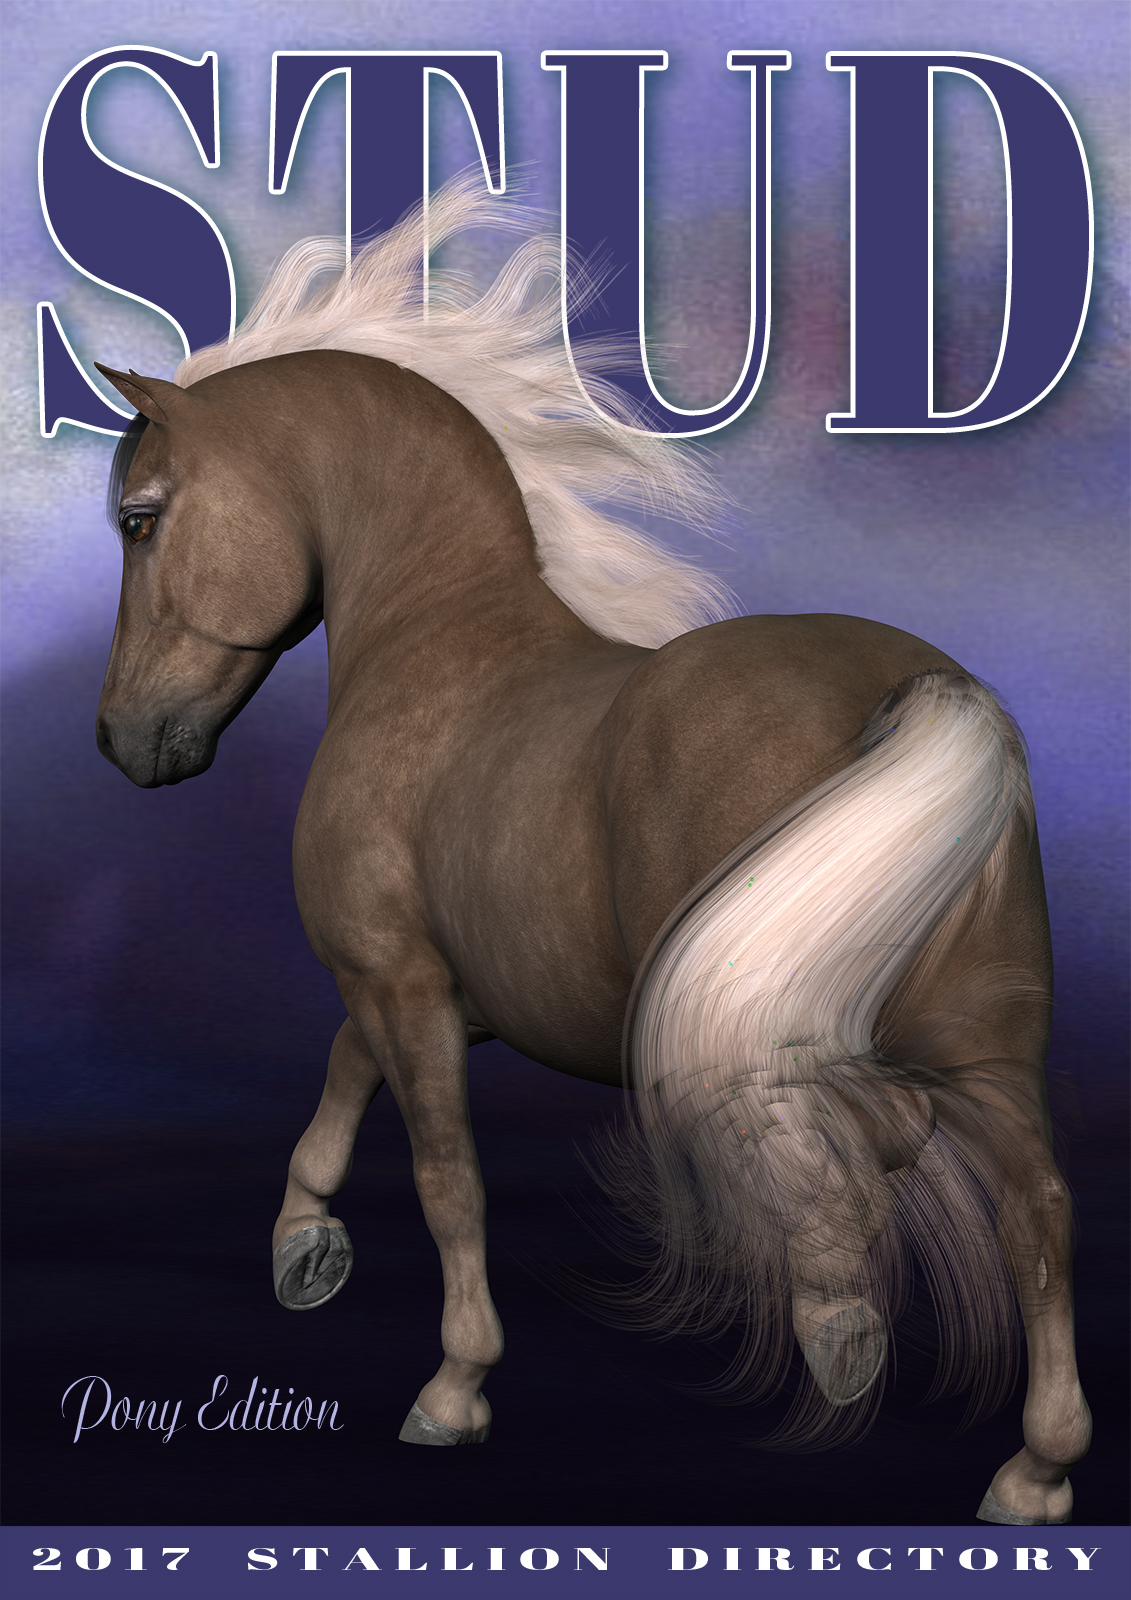 Magazine Cover - Stallion Directory - Pony Edition